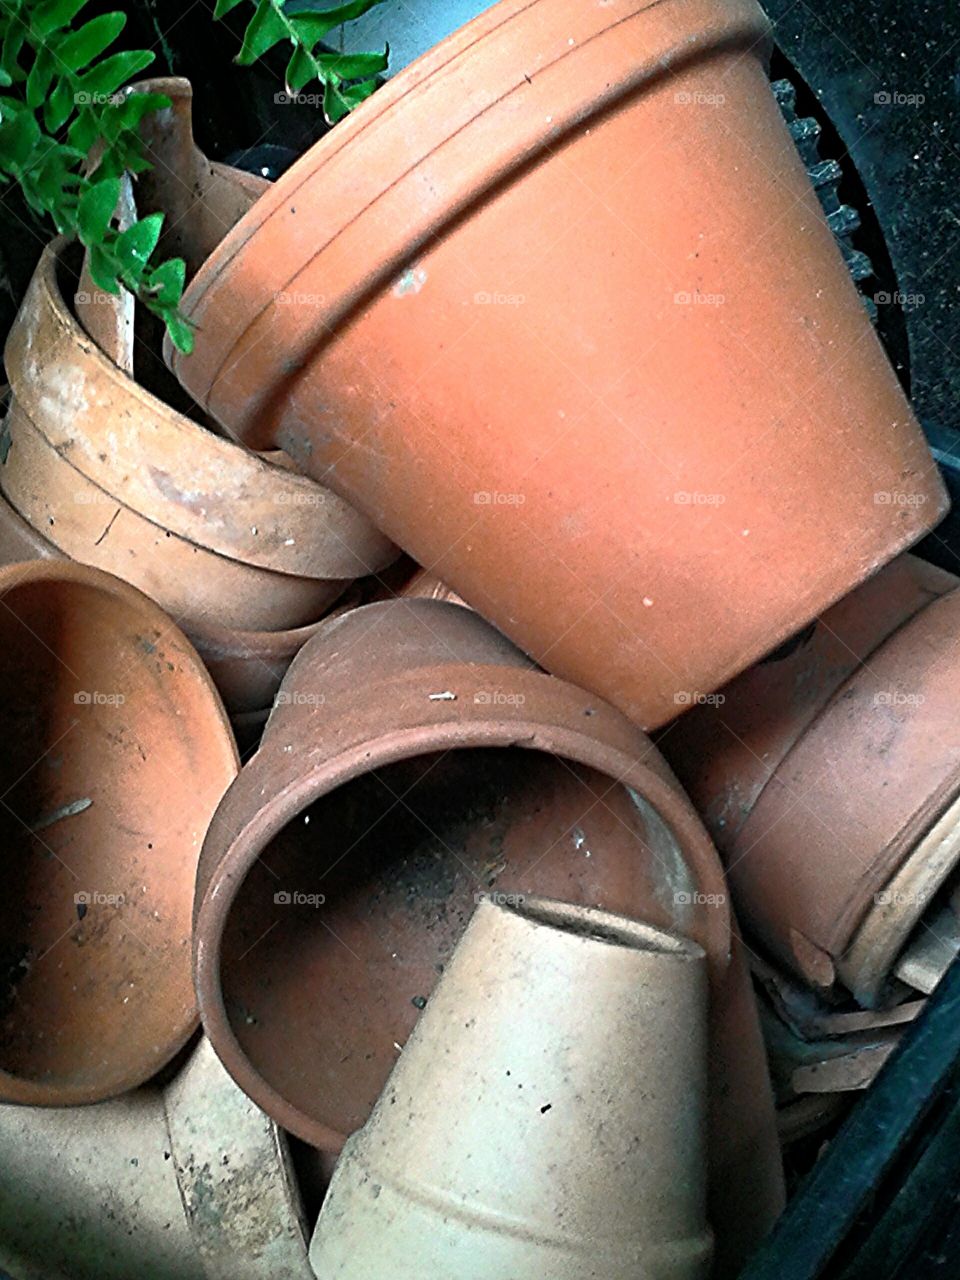 Clay garden pots